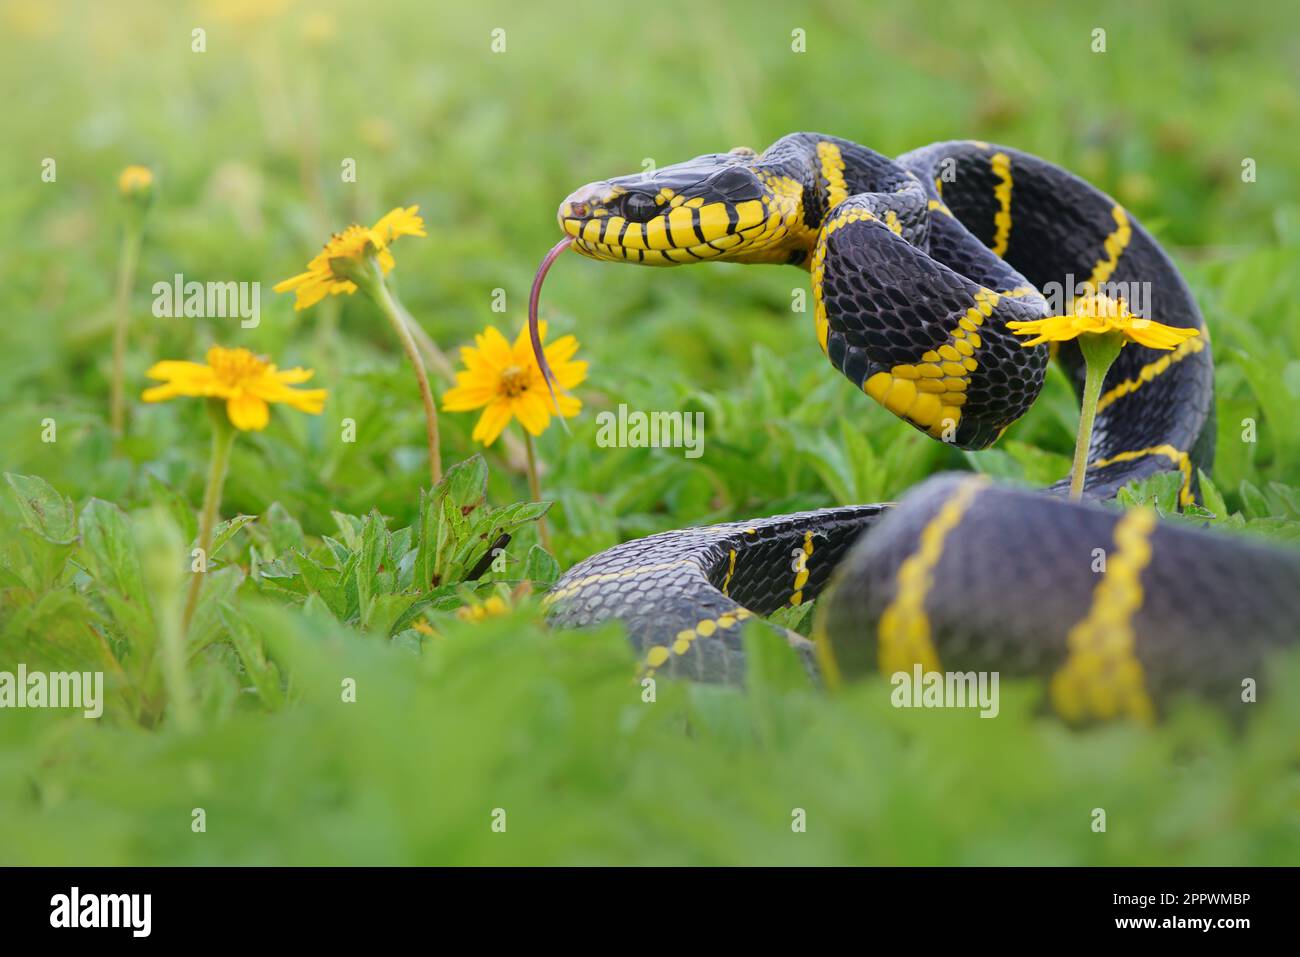 Boiga dendrophila snake in the grass ready to strike, Indonesia Stock Photo